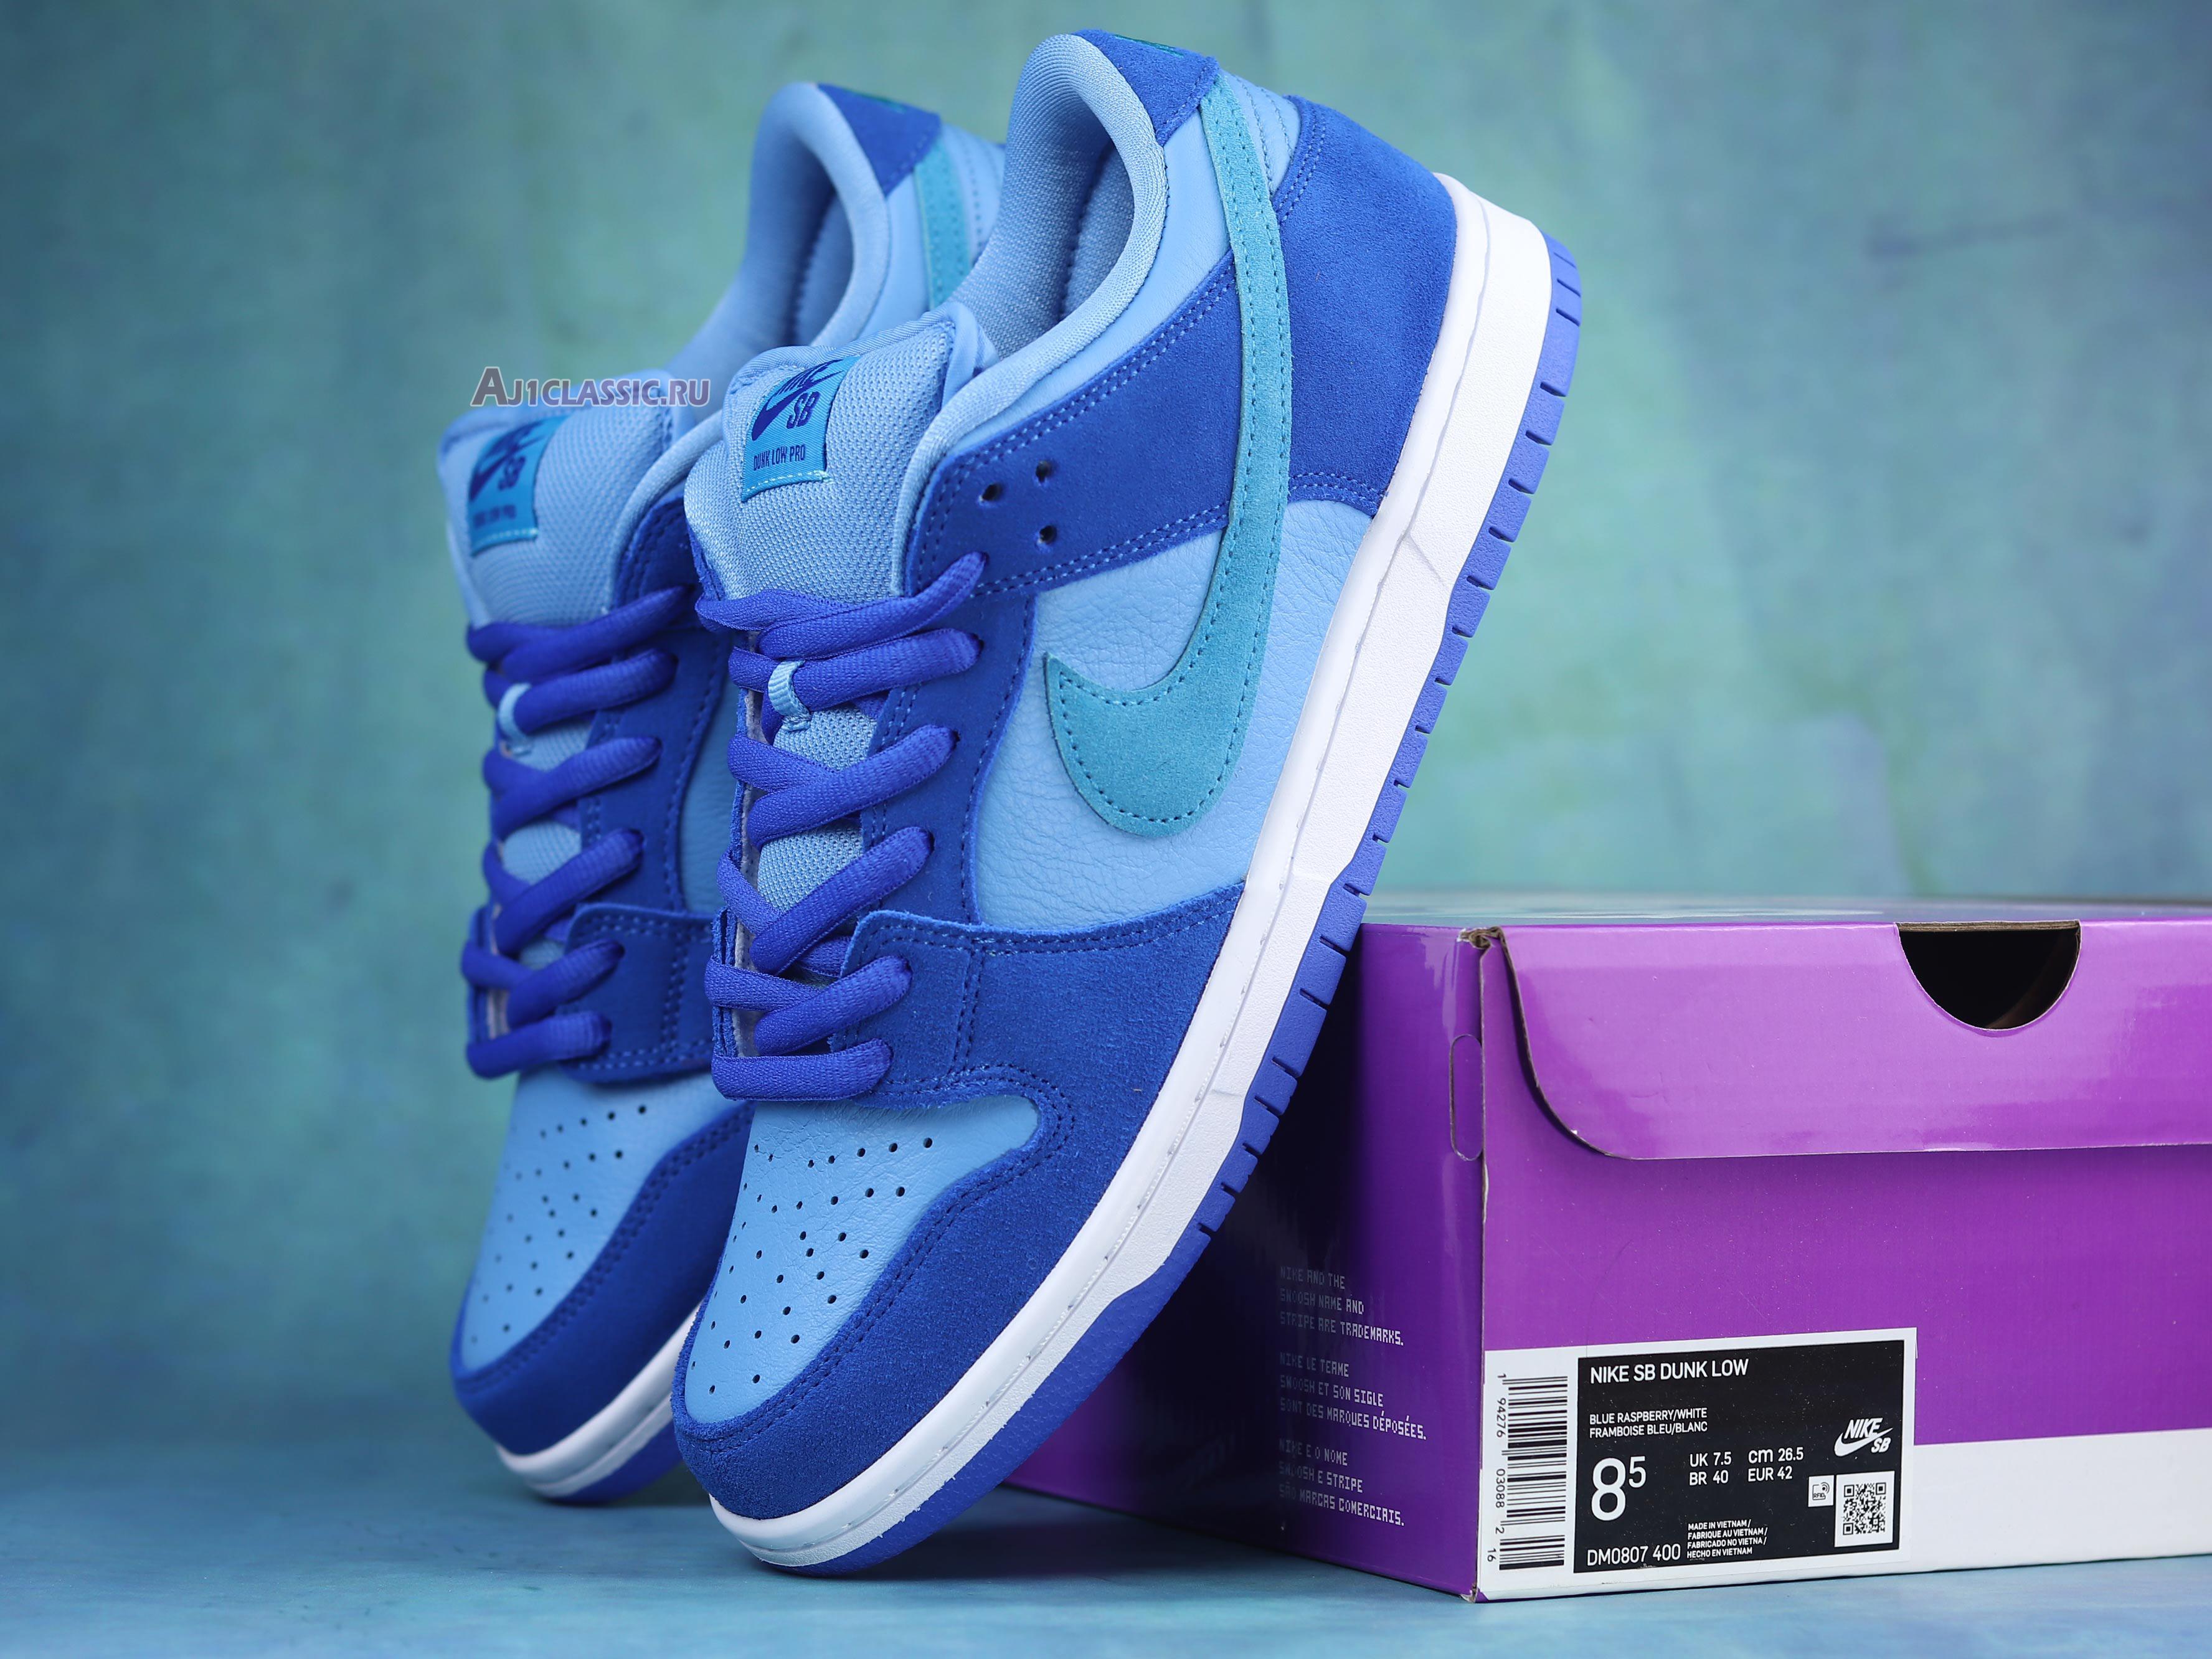 Nike SB Dunk Low "Blue Raspberry" DM0807-400